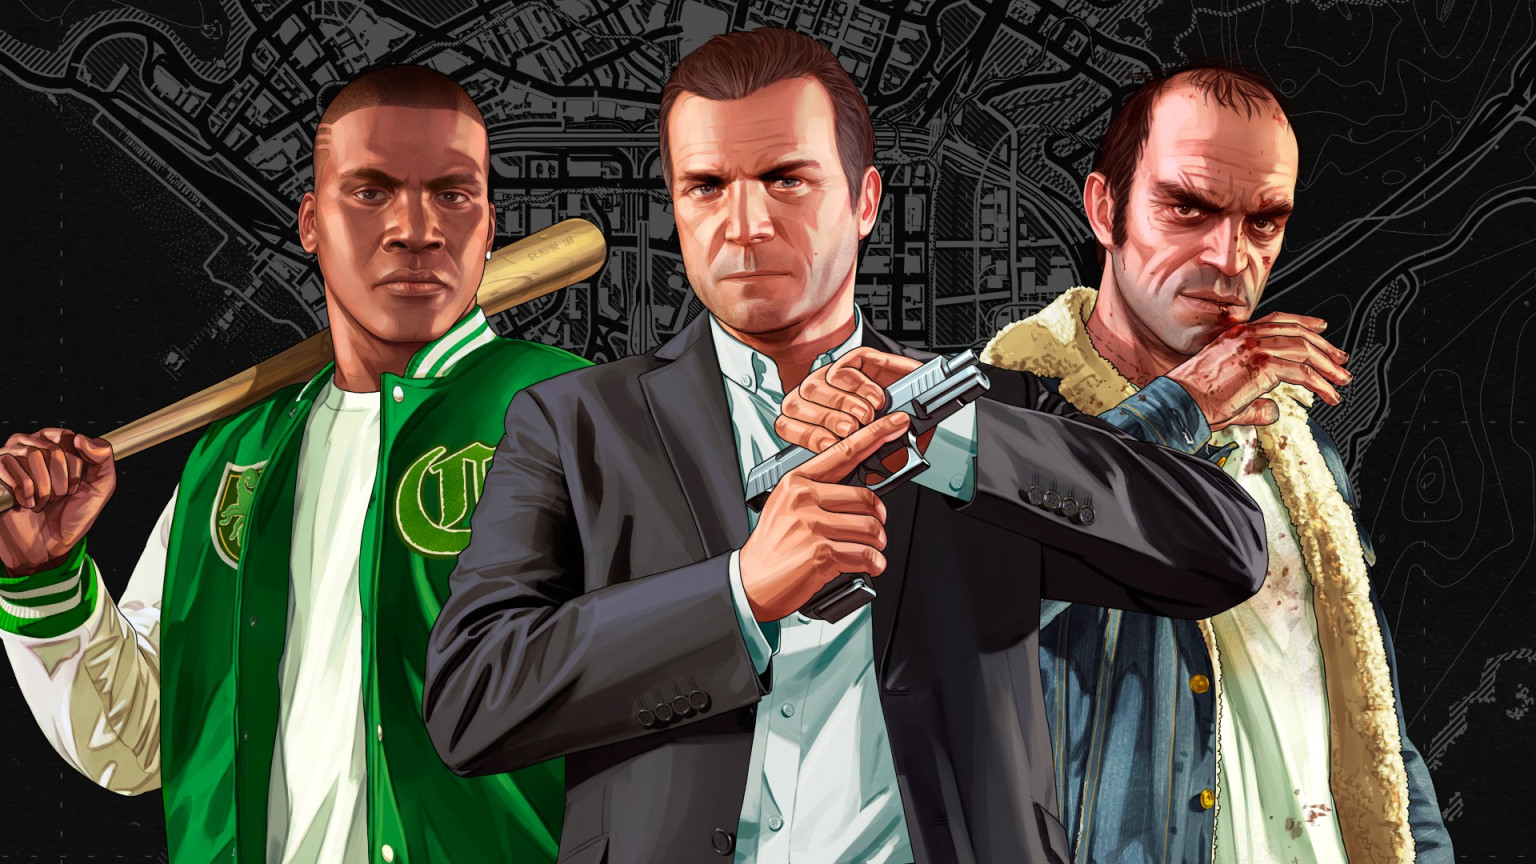 GTA 6 release news: Grand Theft Auto tease as Rockstar Games drop